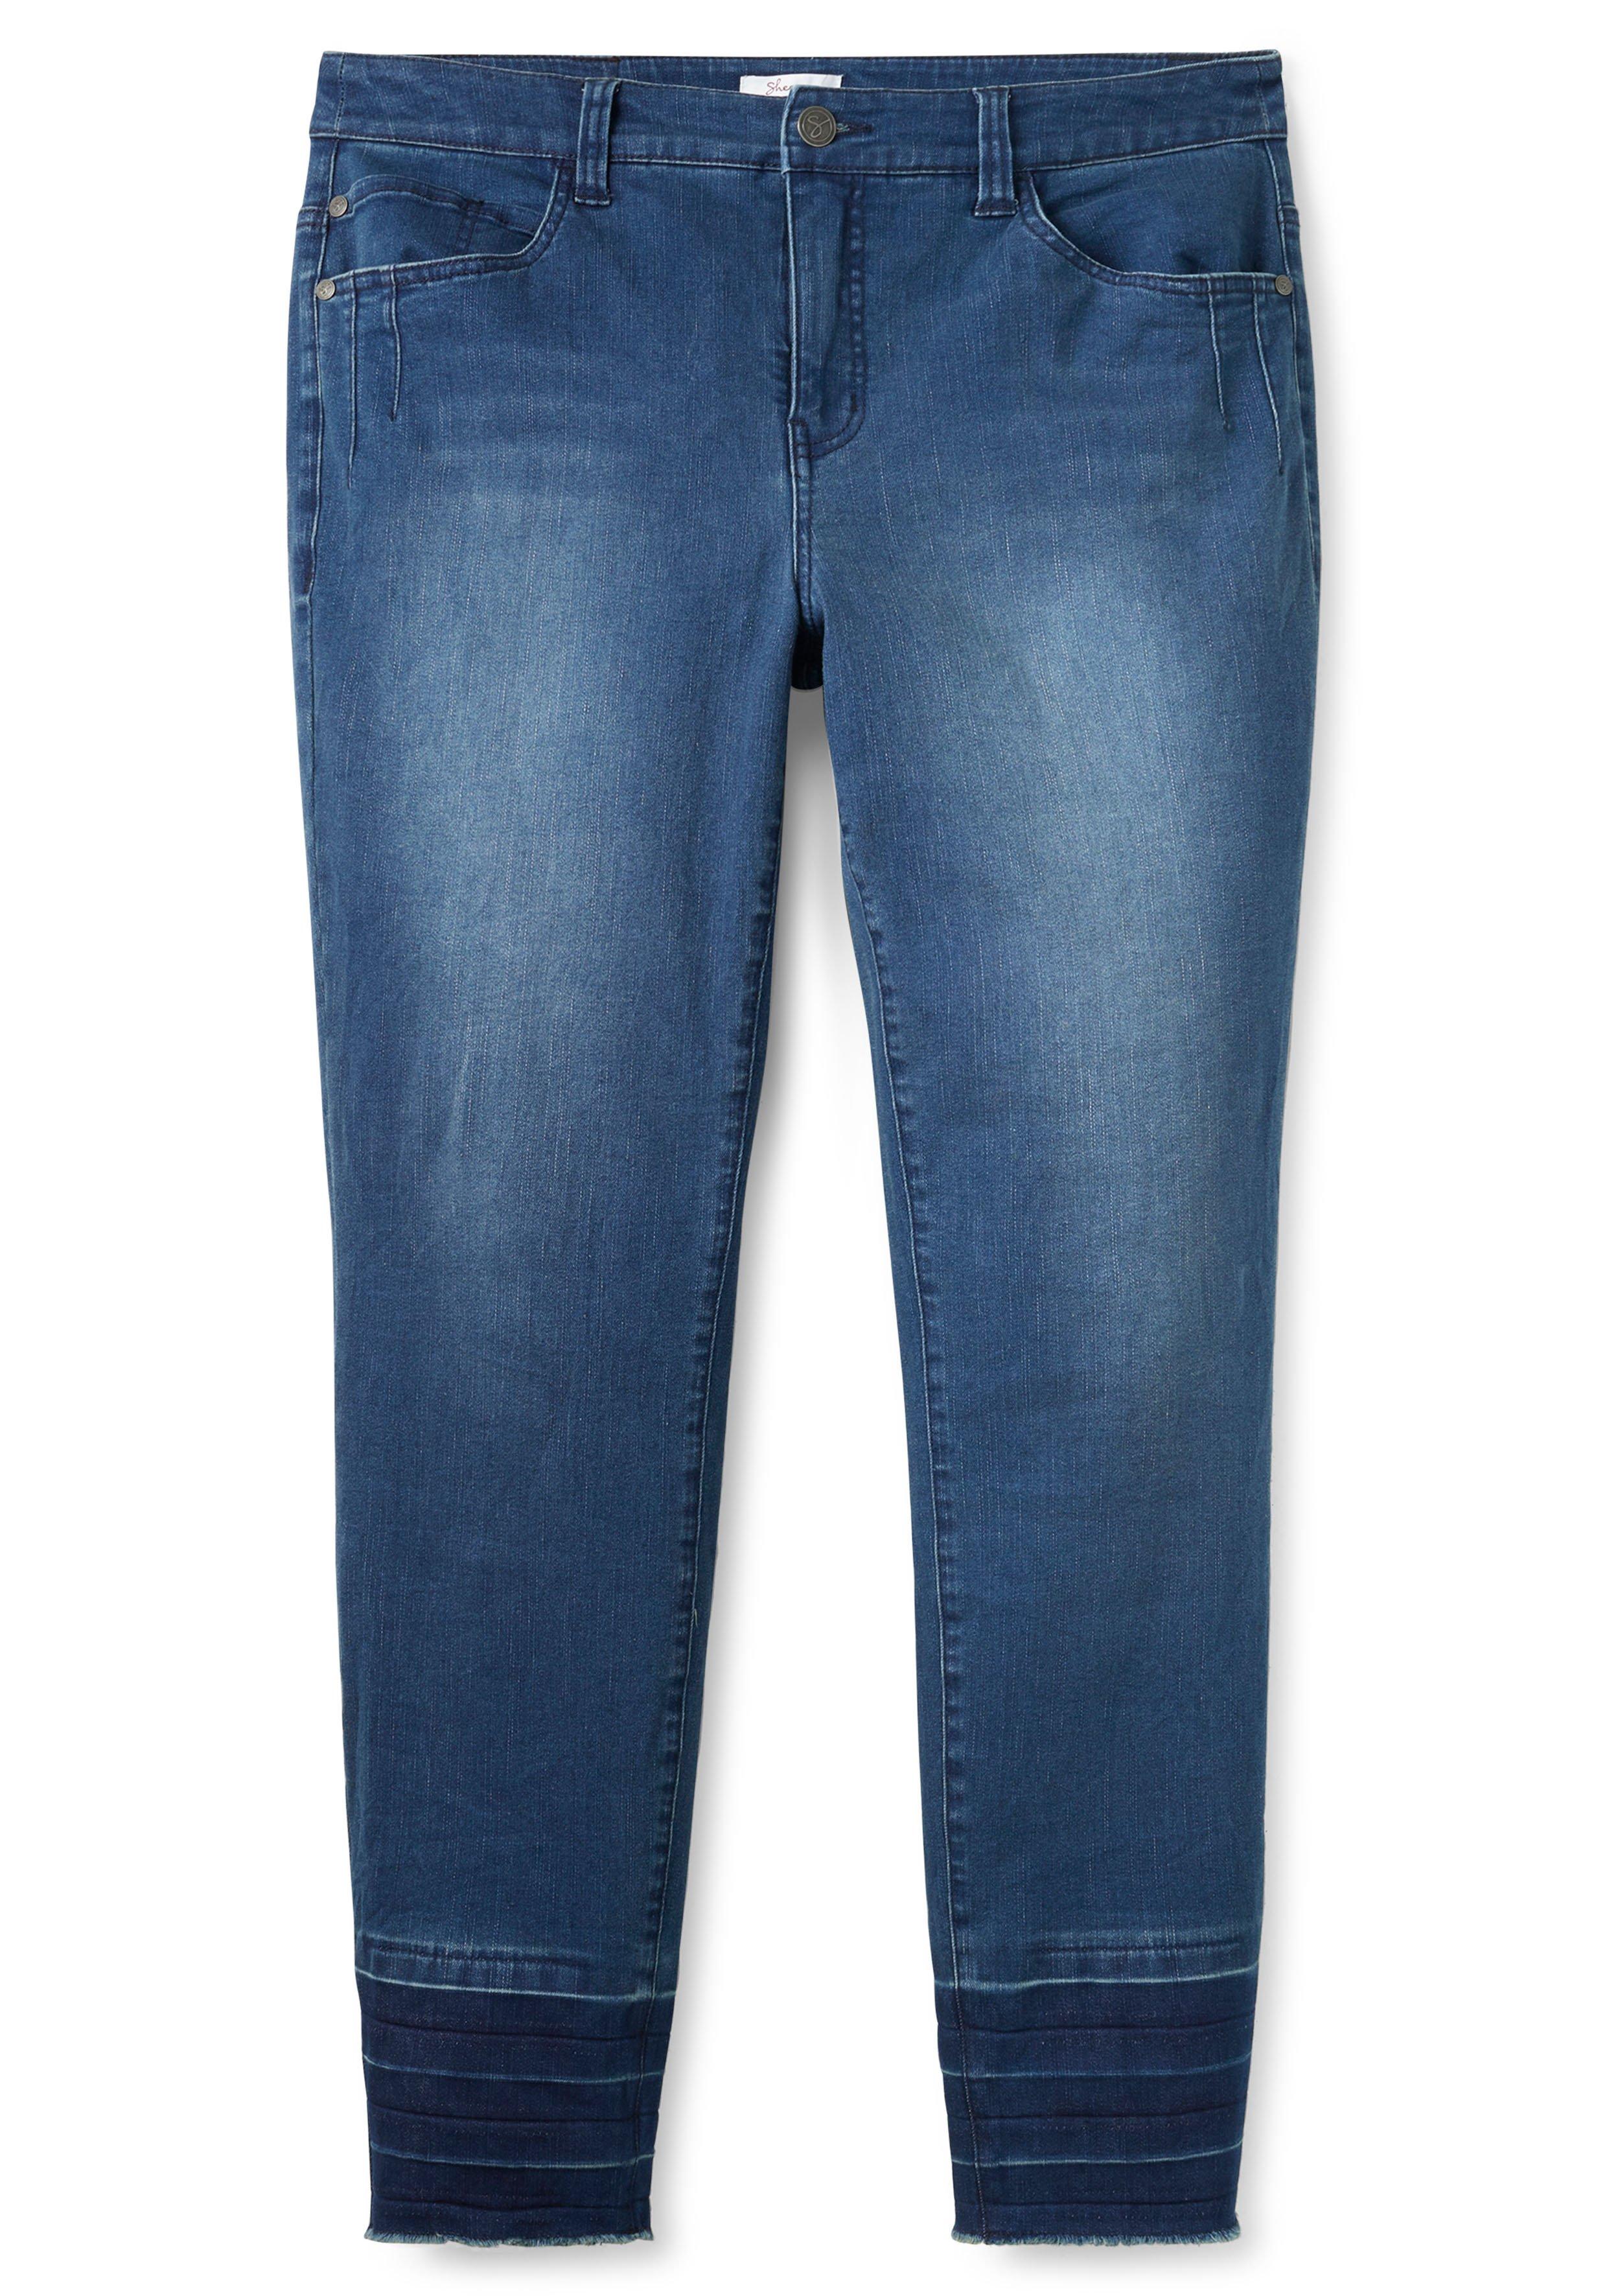 Gerade Jeans im extrahohen Paperbag-Schnitt - light blue Denim | sheego